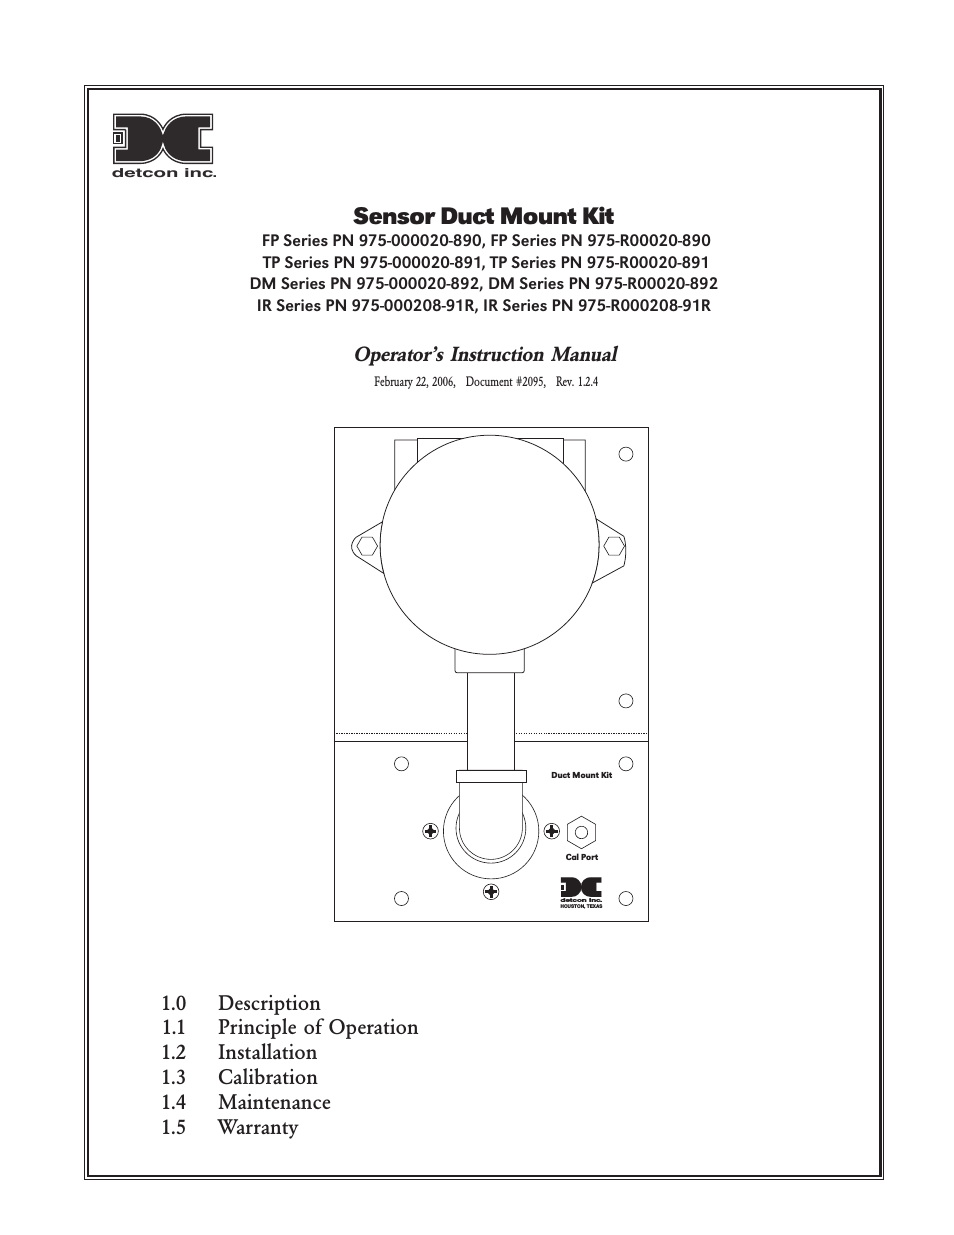 Sensor Duct Mount Kit FP/TP/DM/IR Series